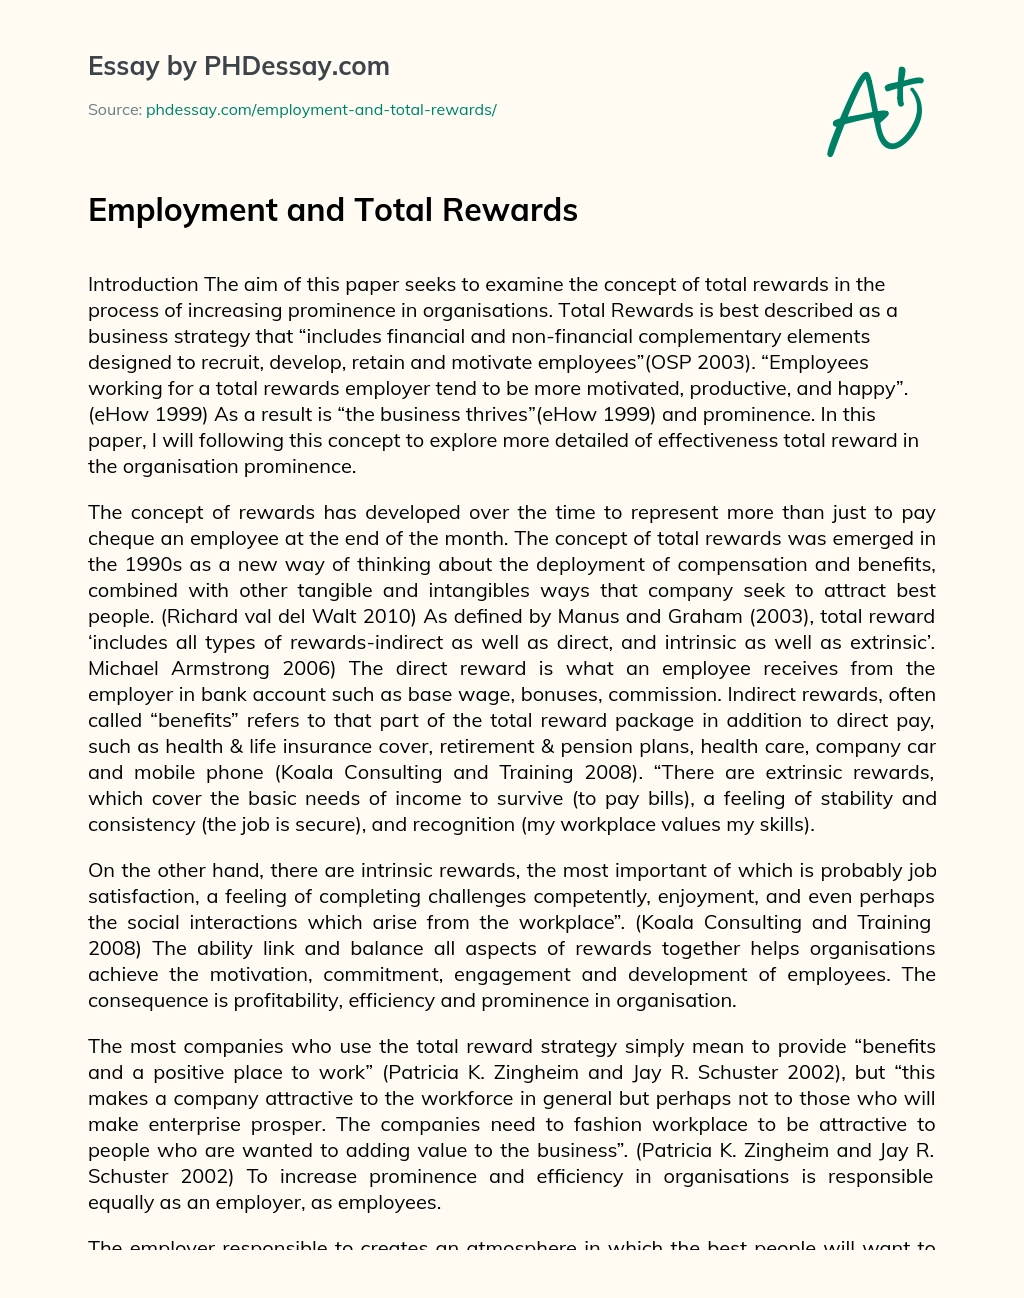 Employment and Total Rewards essay